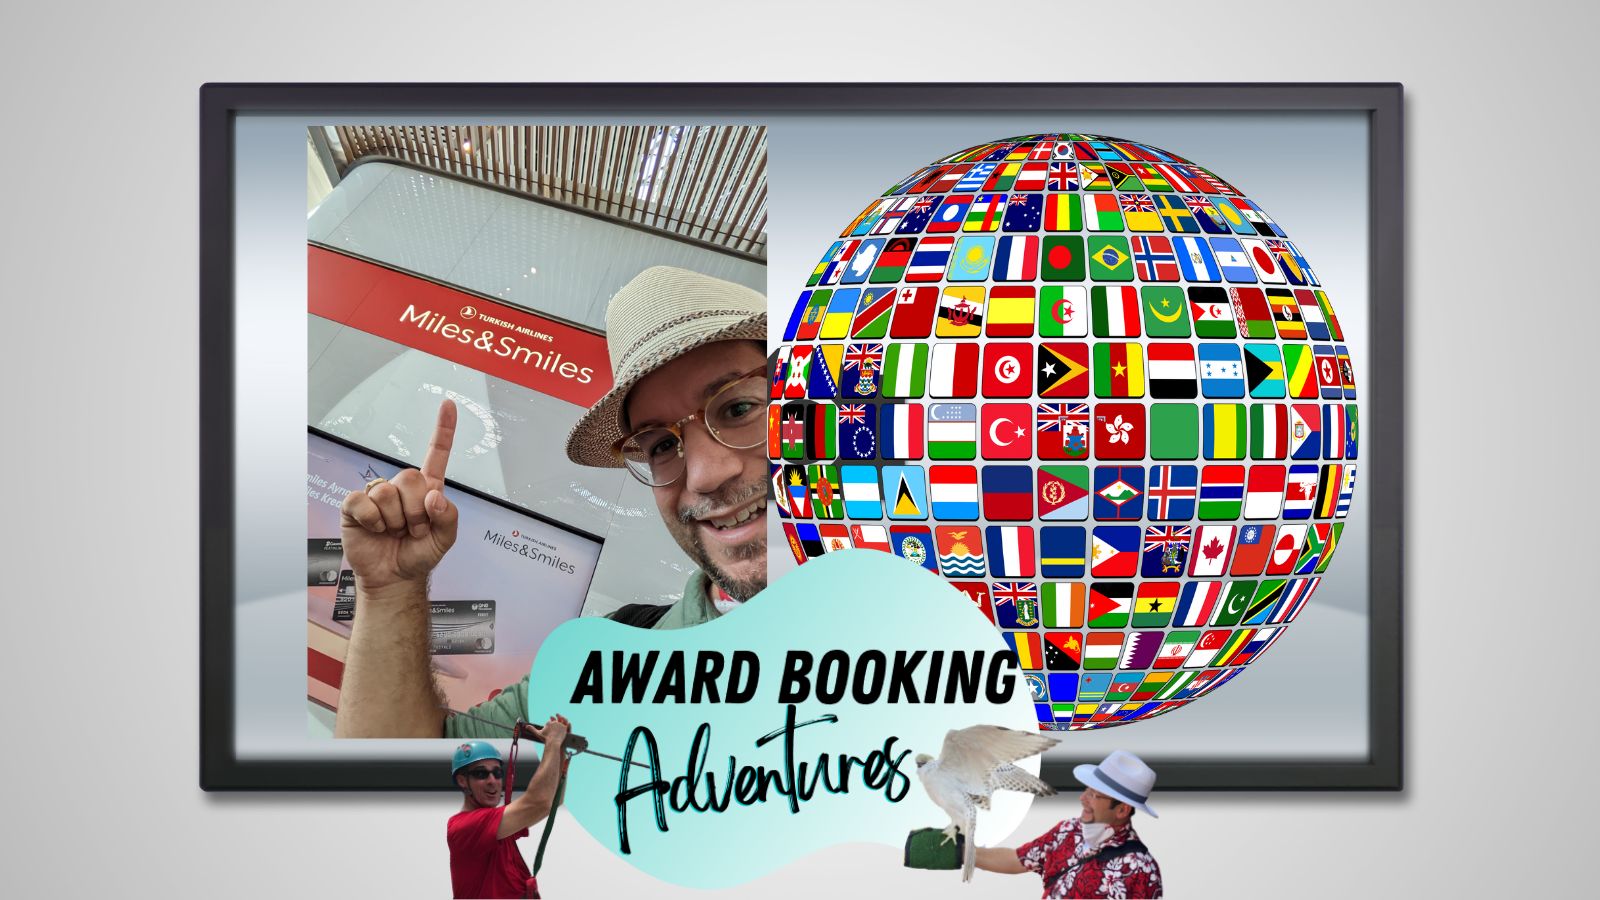 Award booking adventures Turkish Miles & Smiles